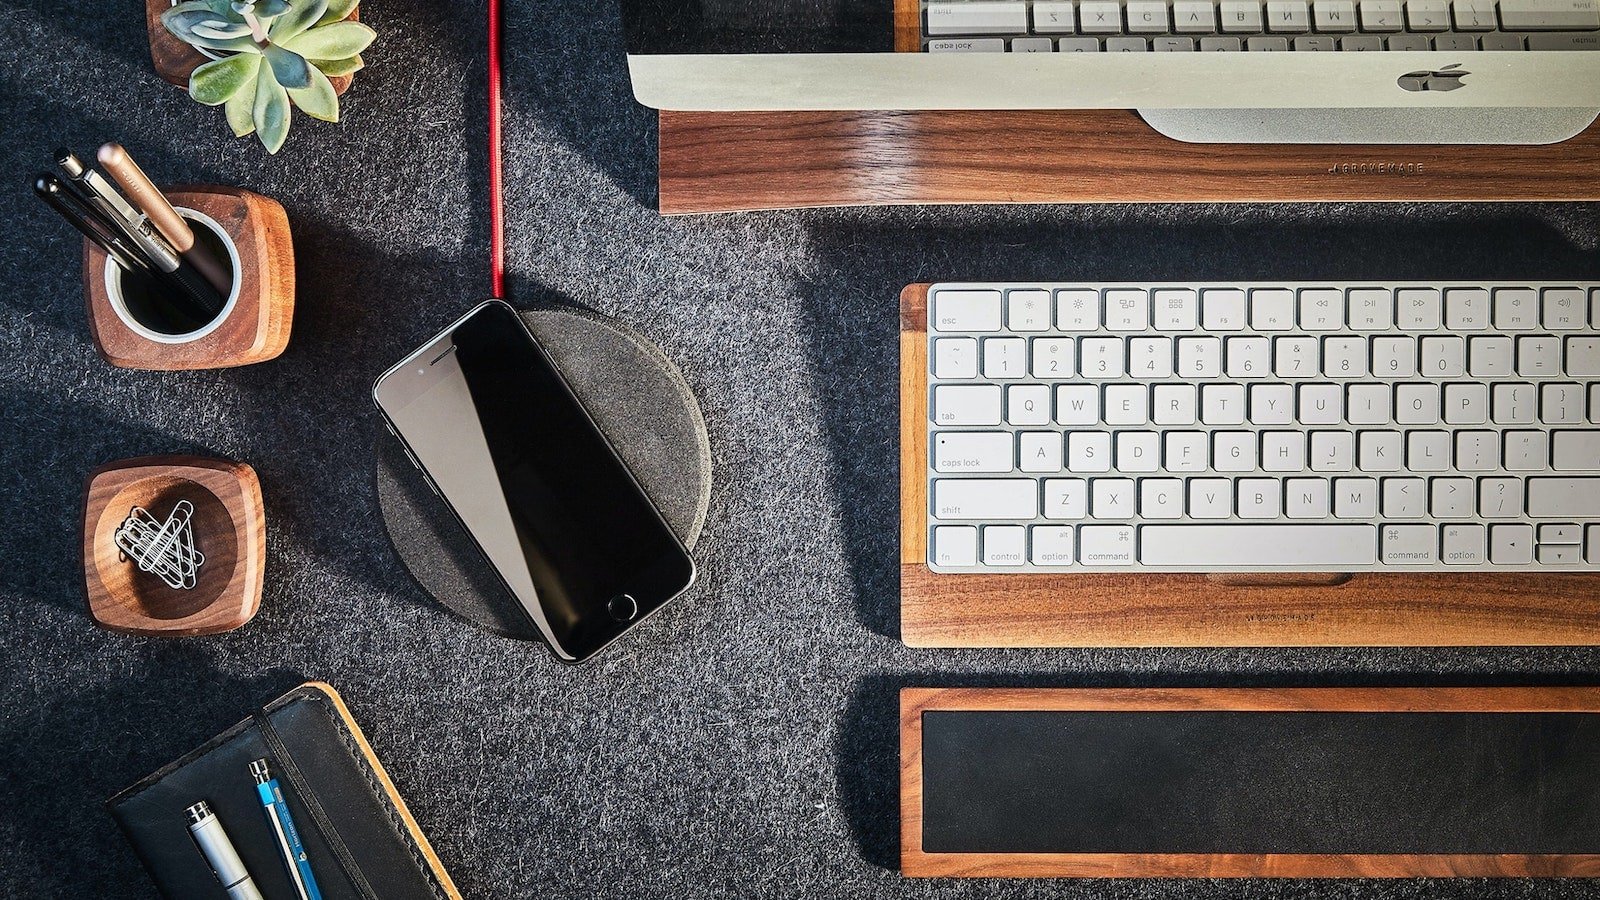 Grovemade Wood Keyboard Tray is a handy landing spot for your Apple wireless keyboard